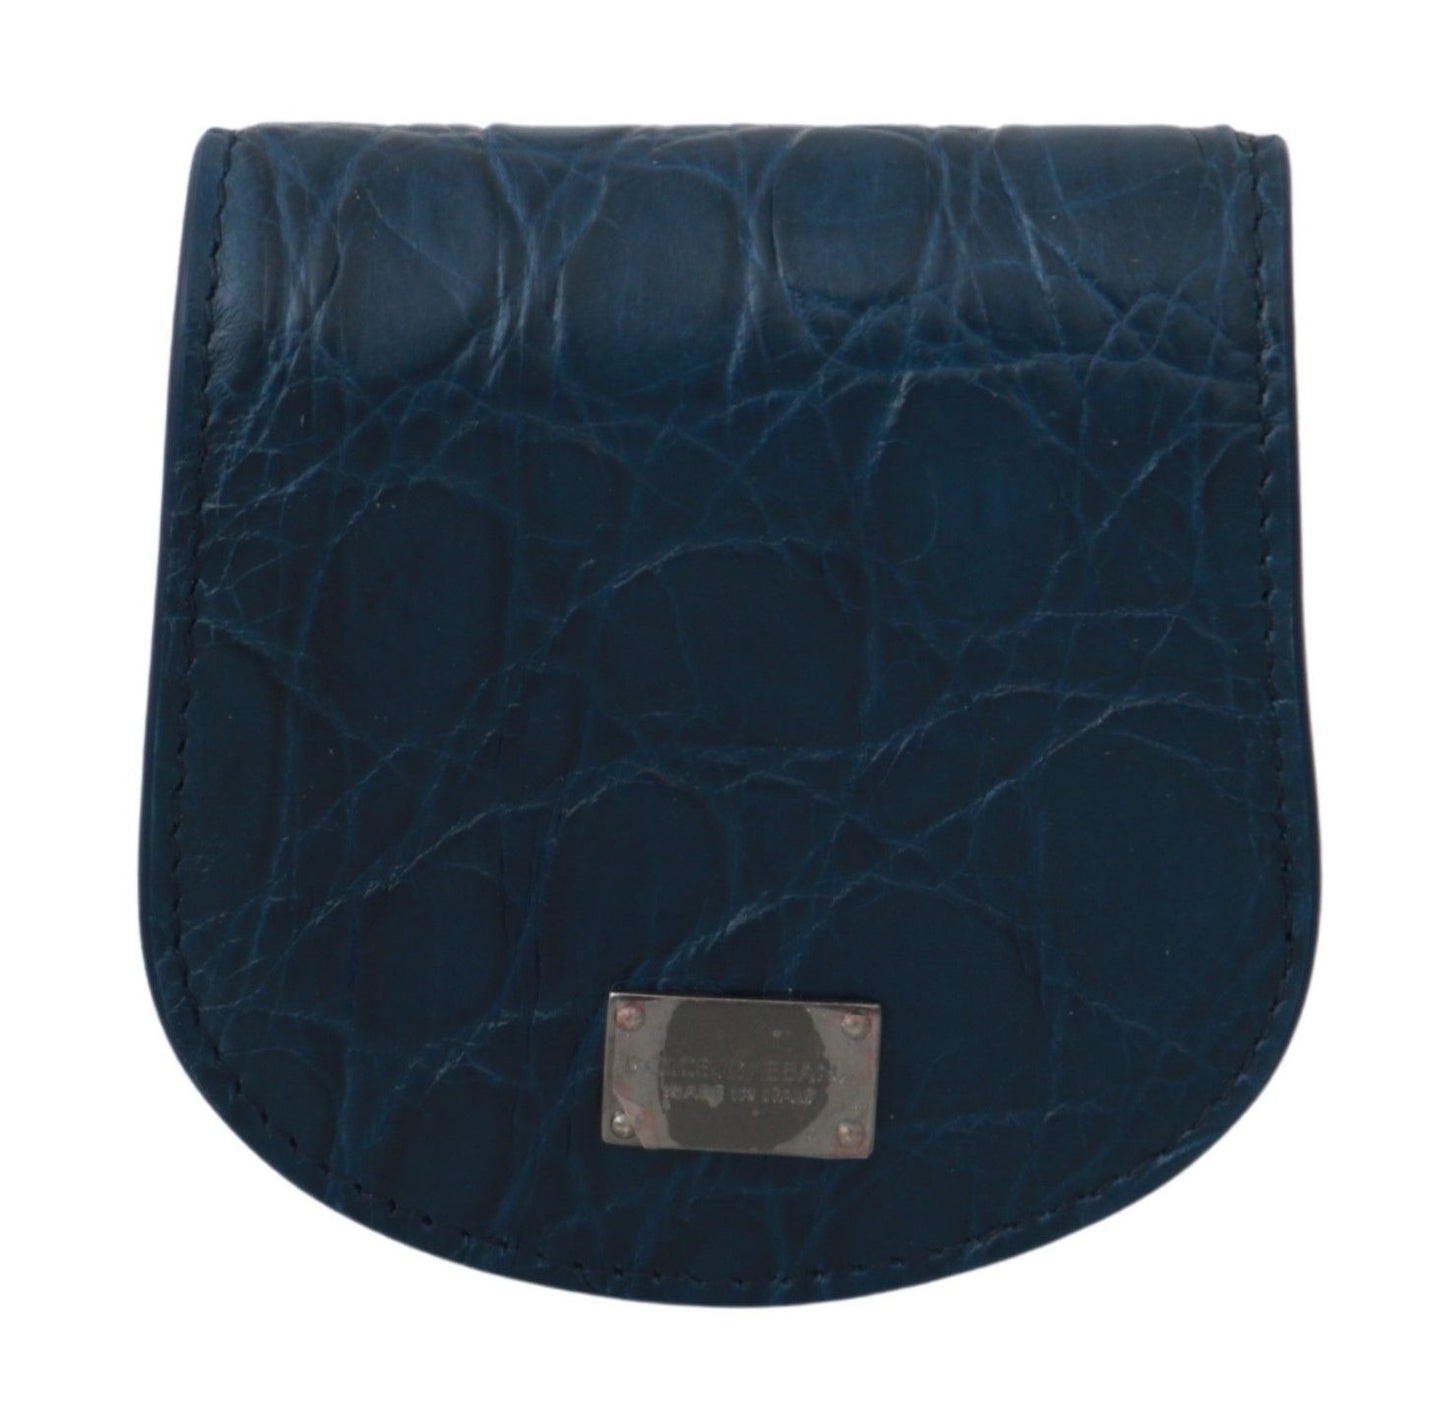 Dolce & Gabbana Blue Leather Holder Pocket Condom Case